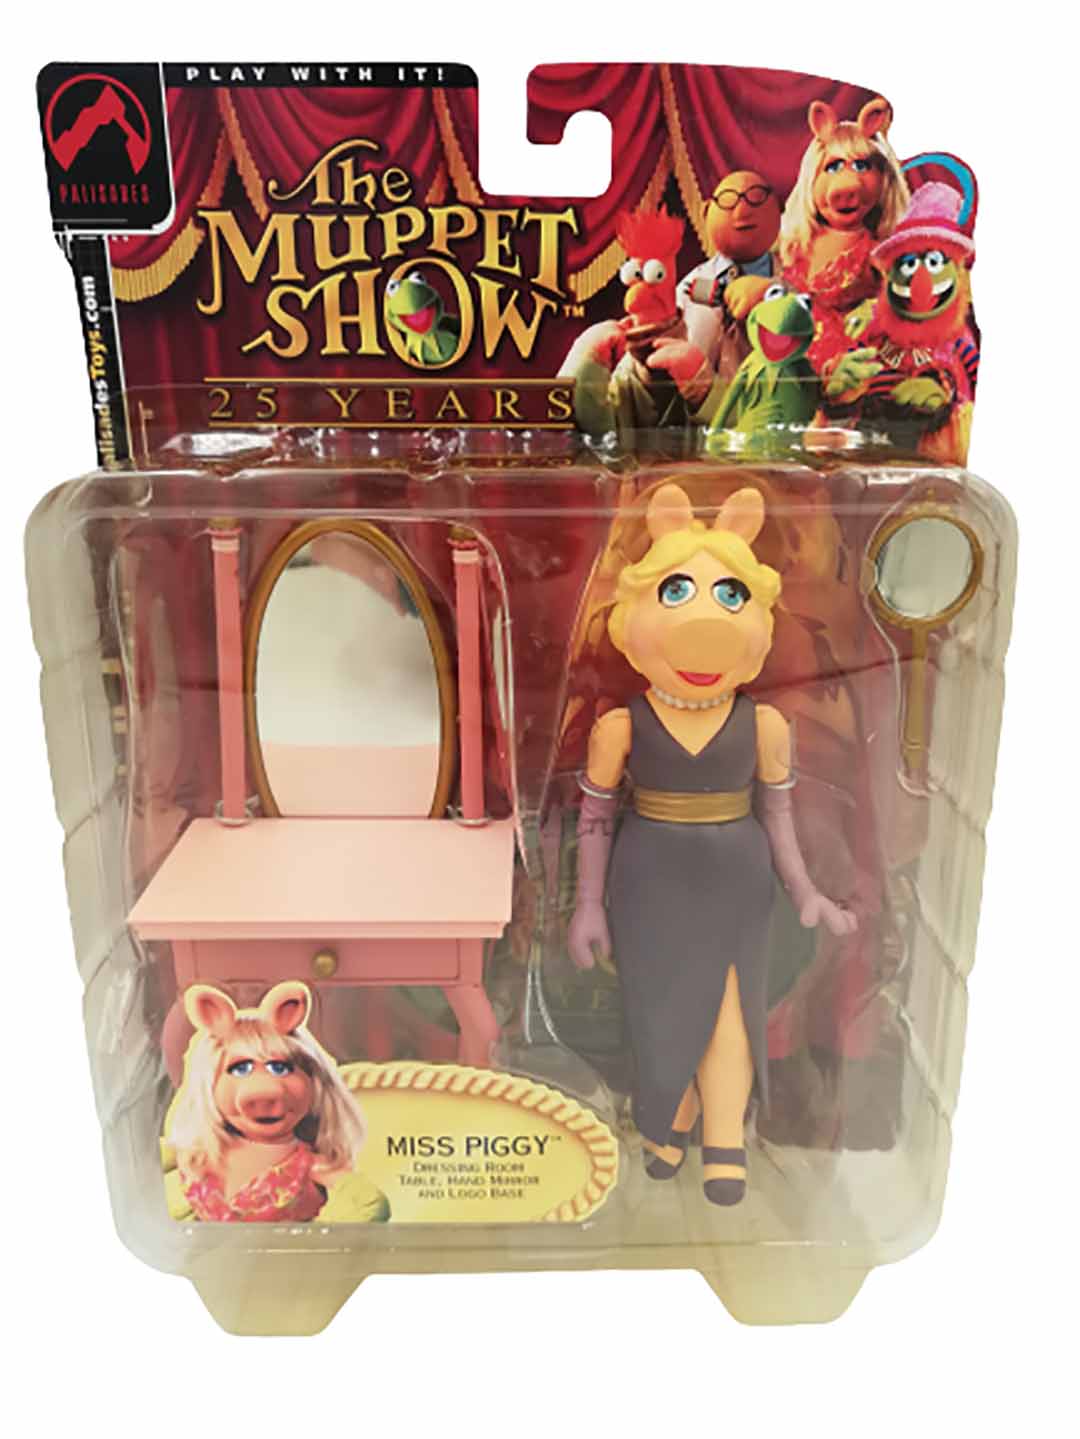 The Muppet Show 25 years: Miss Piggy 15cm Figure – 2002 | Vam Toys